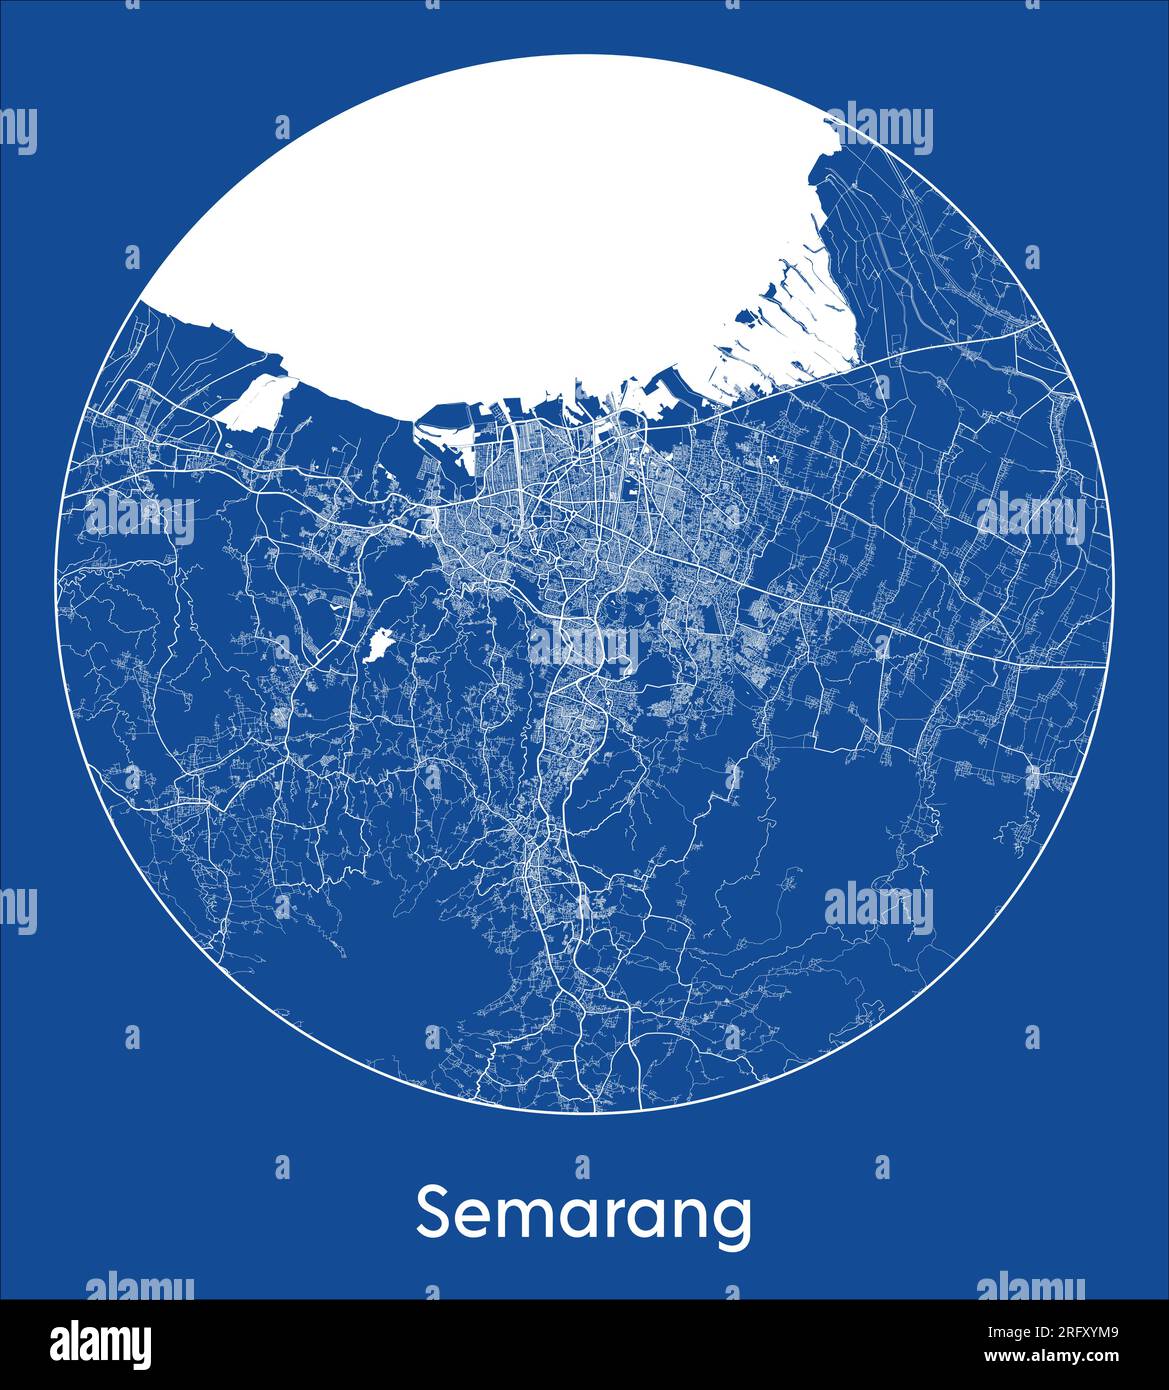 City Map Semarang Indonesia Asia blue print round Circle vector illustration Stock Vector